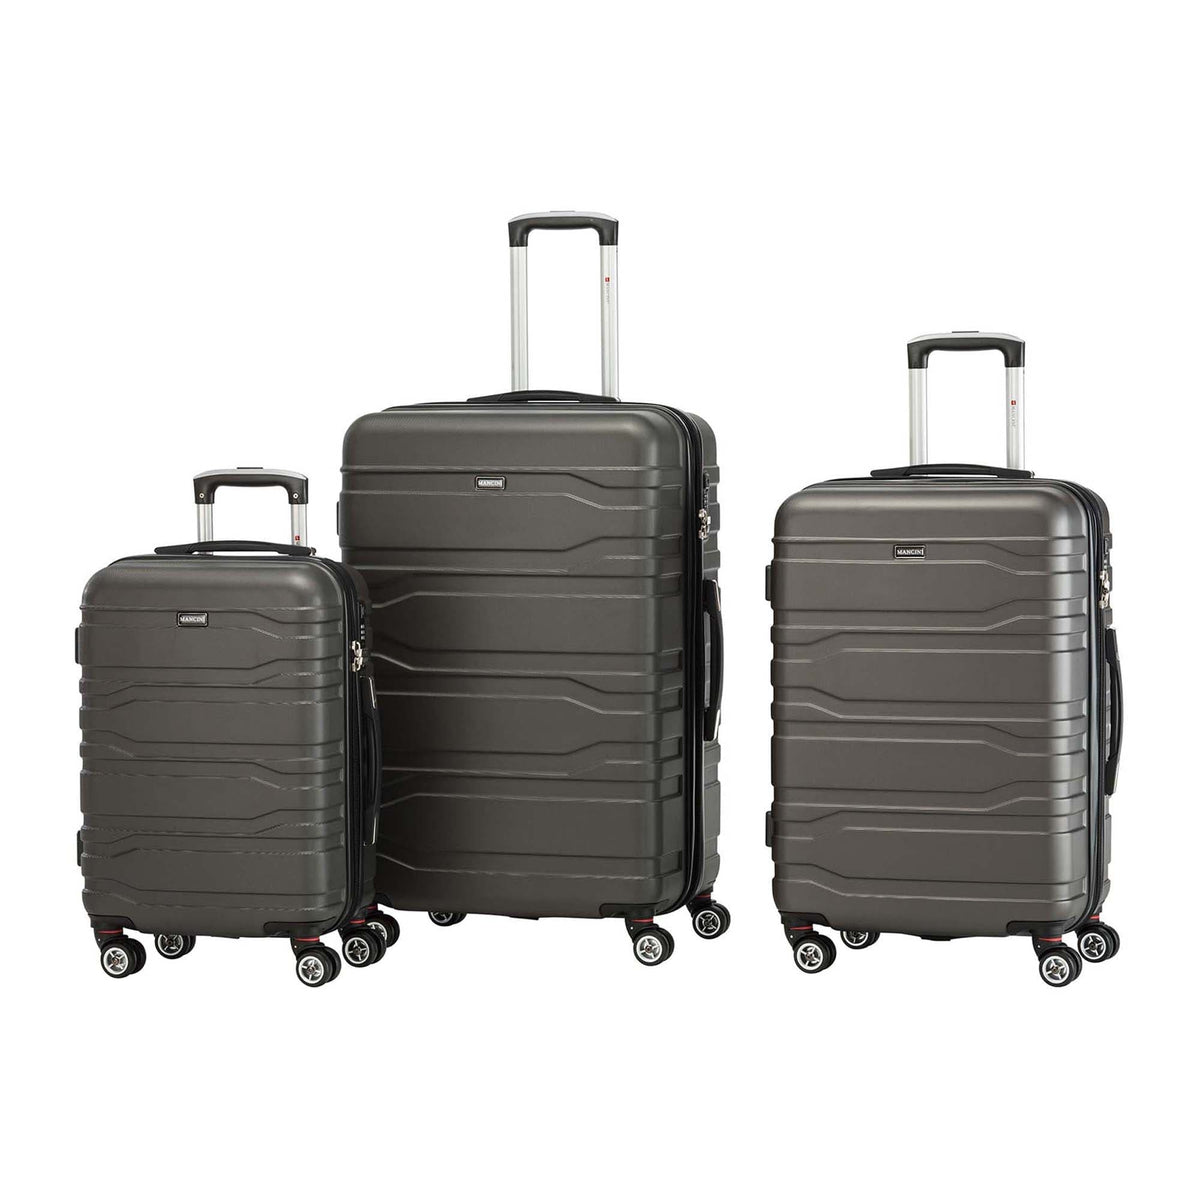 Mancini San Marino Lightweight 3 Piece Spinner Luggage Set